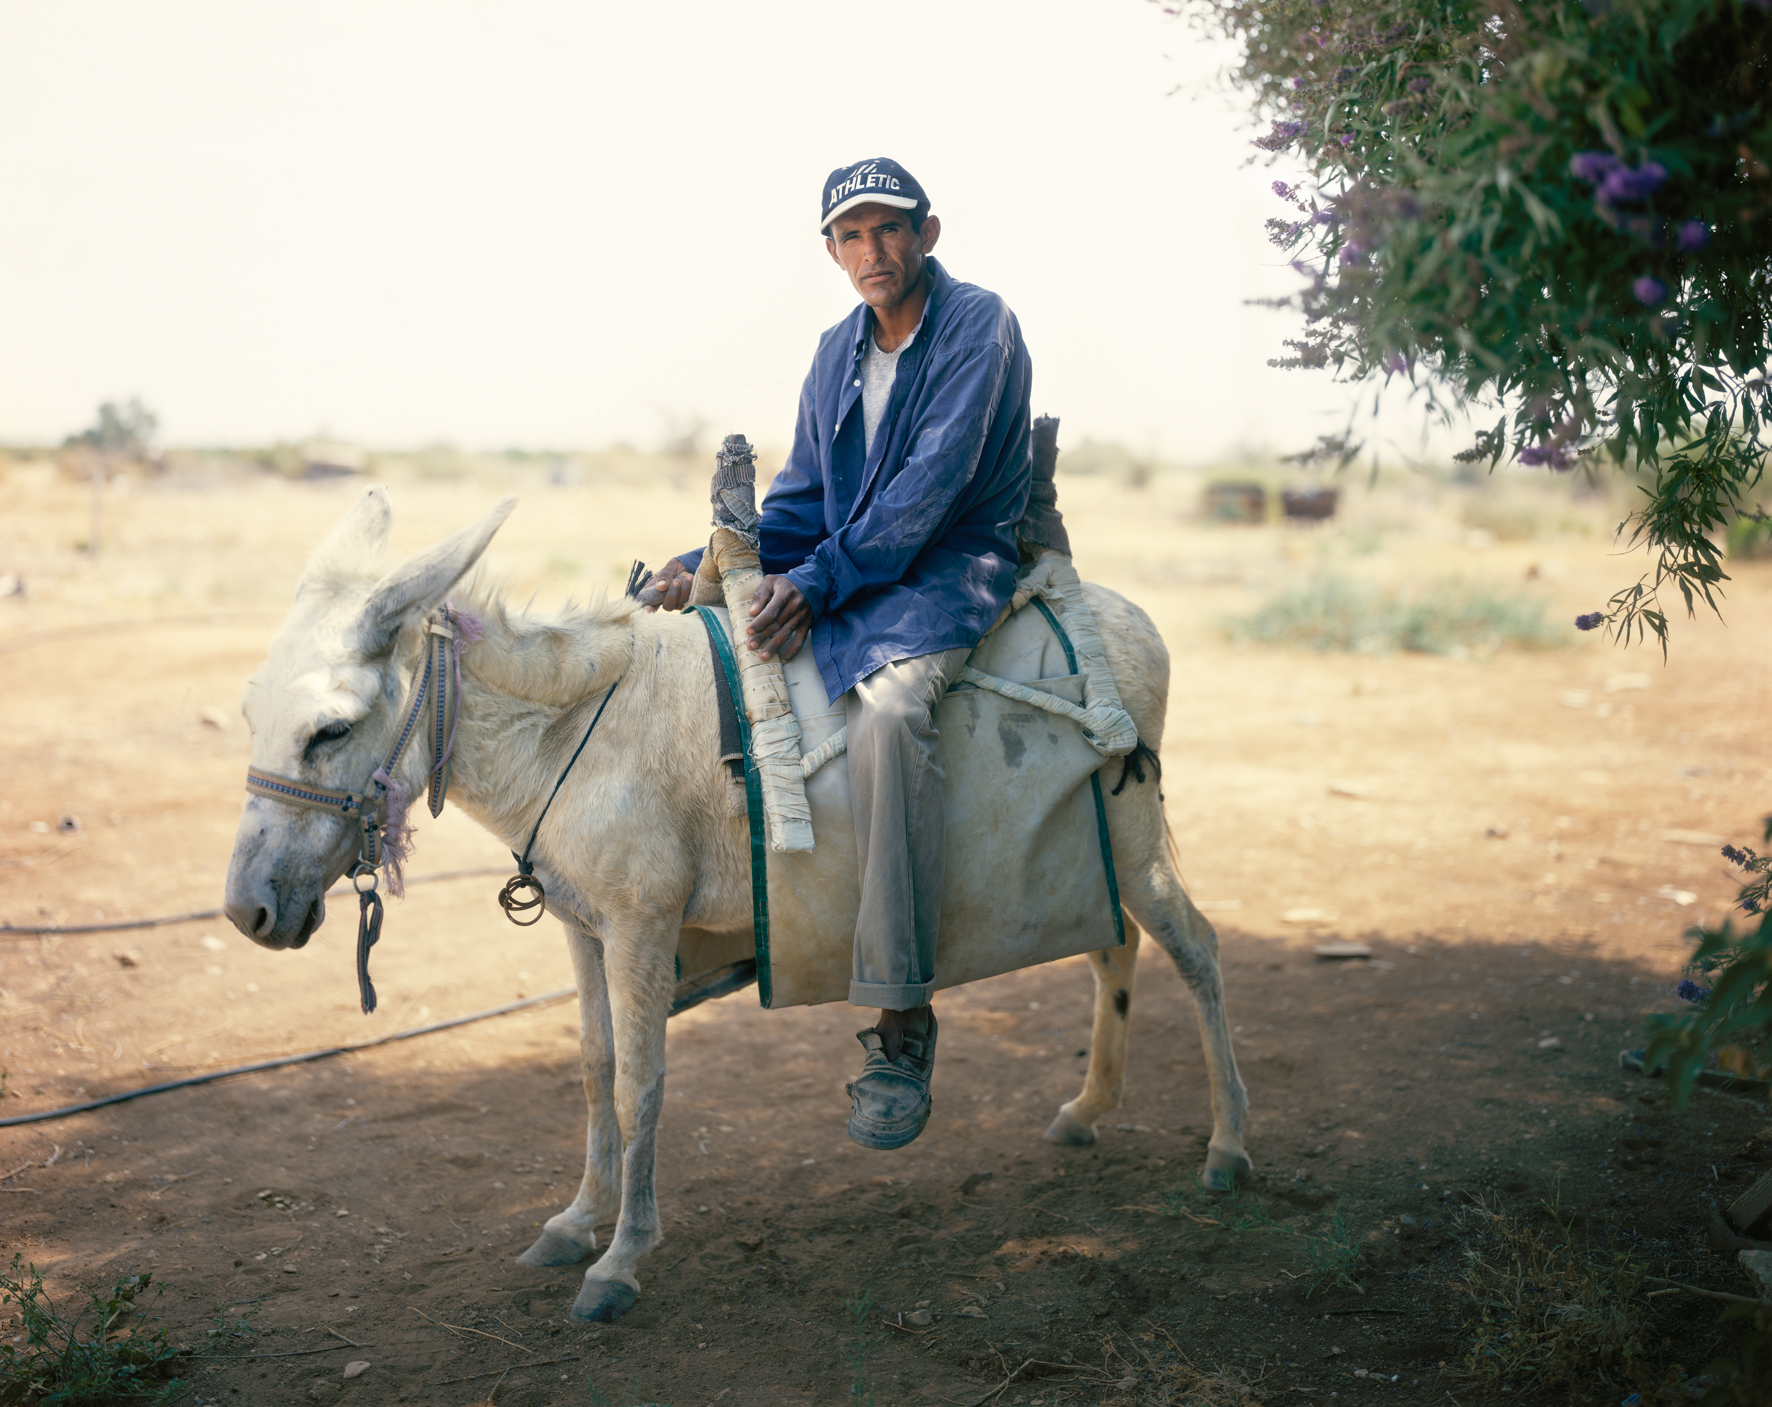 The Man on the White Donkey, HaBiqah, 2006. © Yaakov Israel